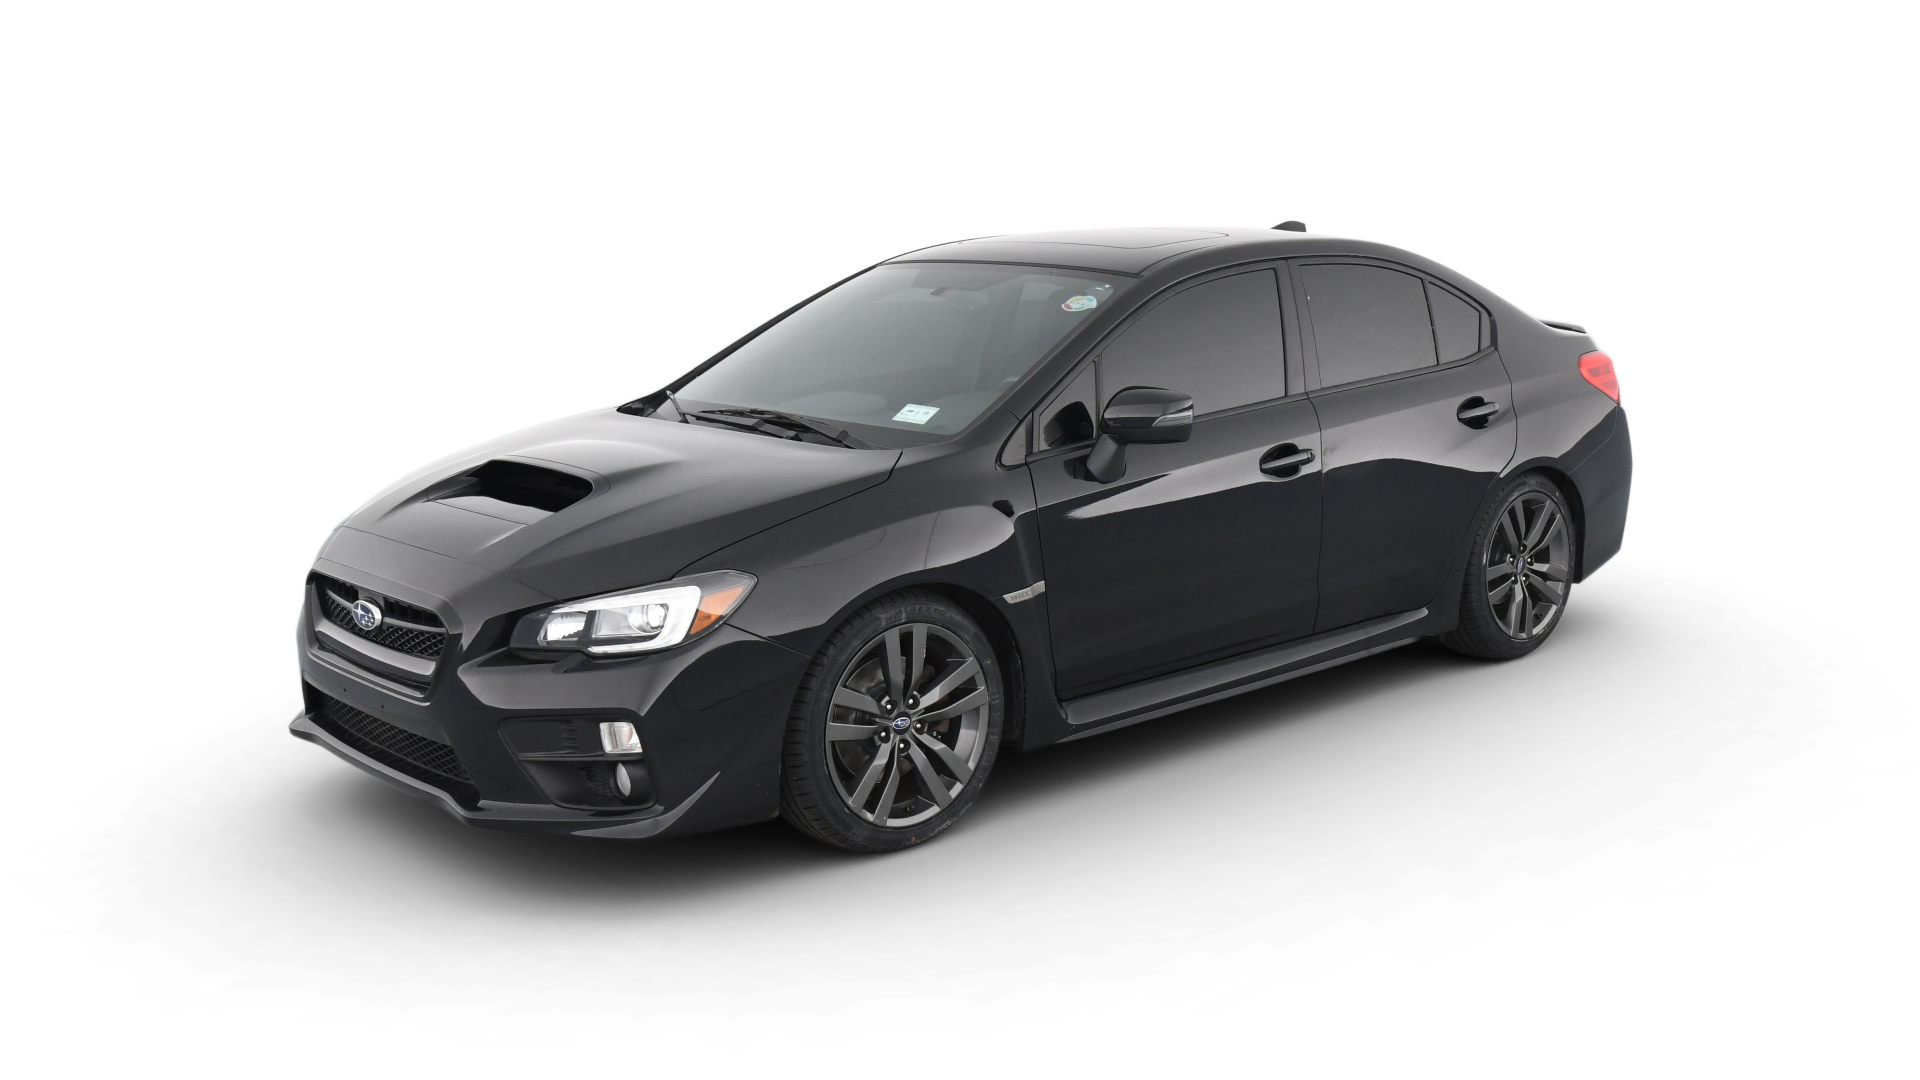 Subaru WRX model image.